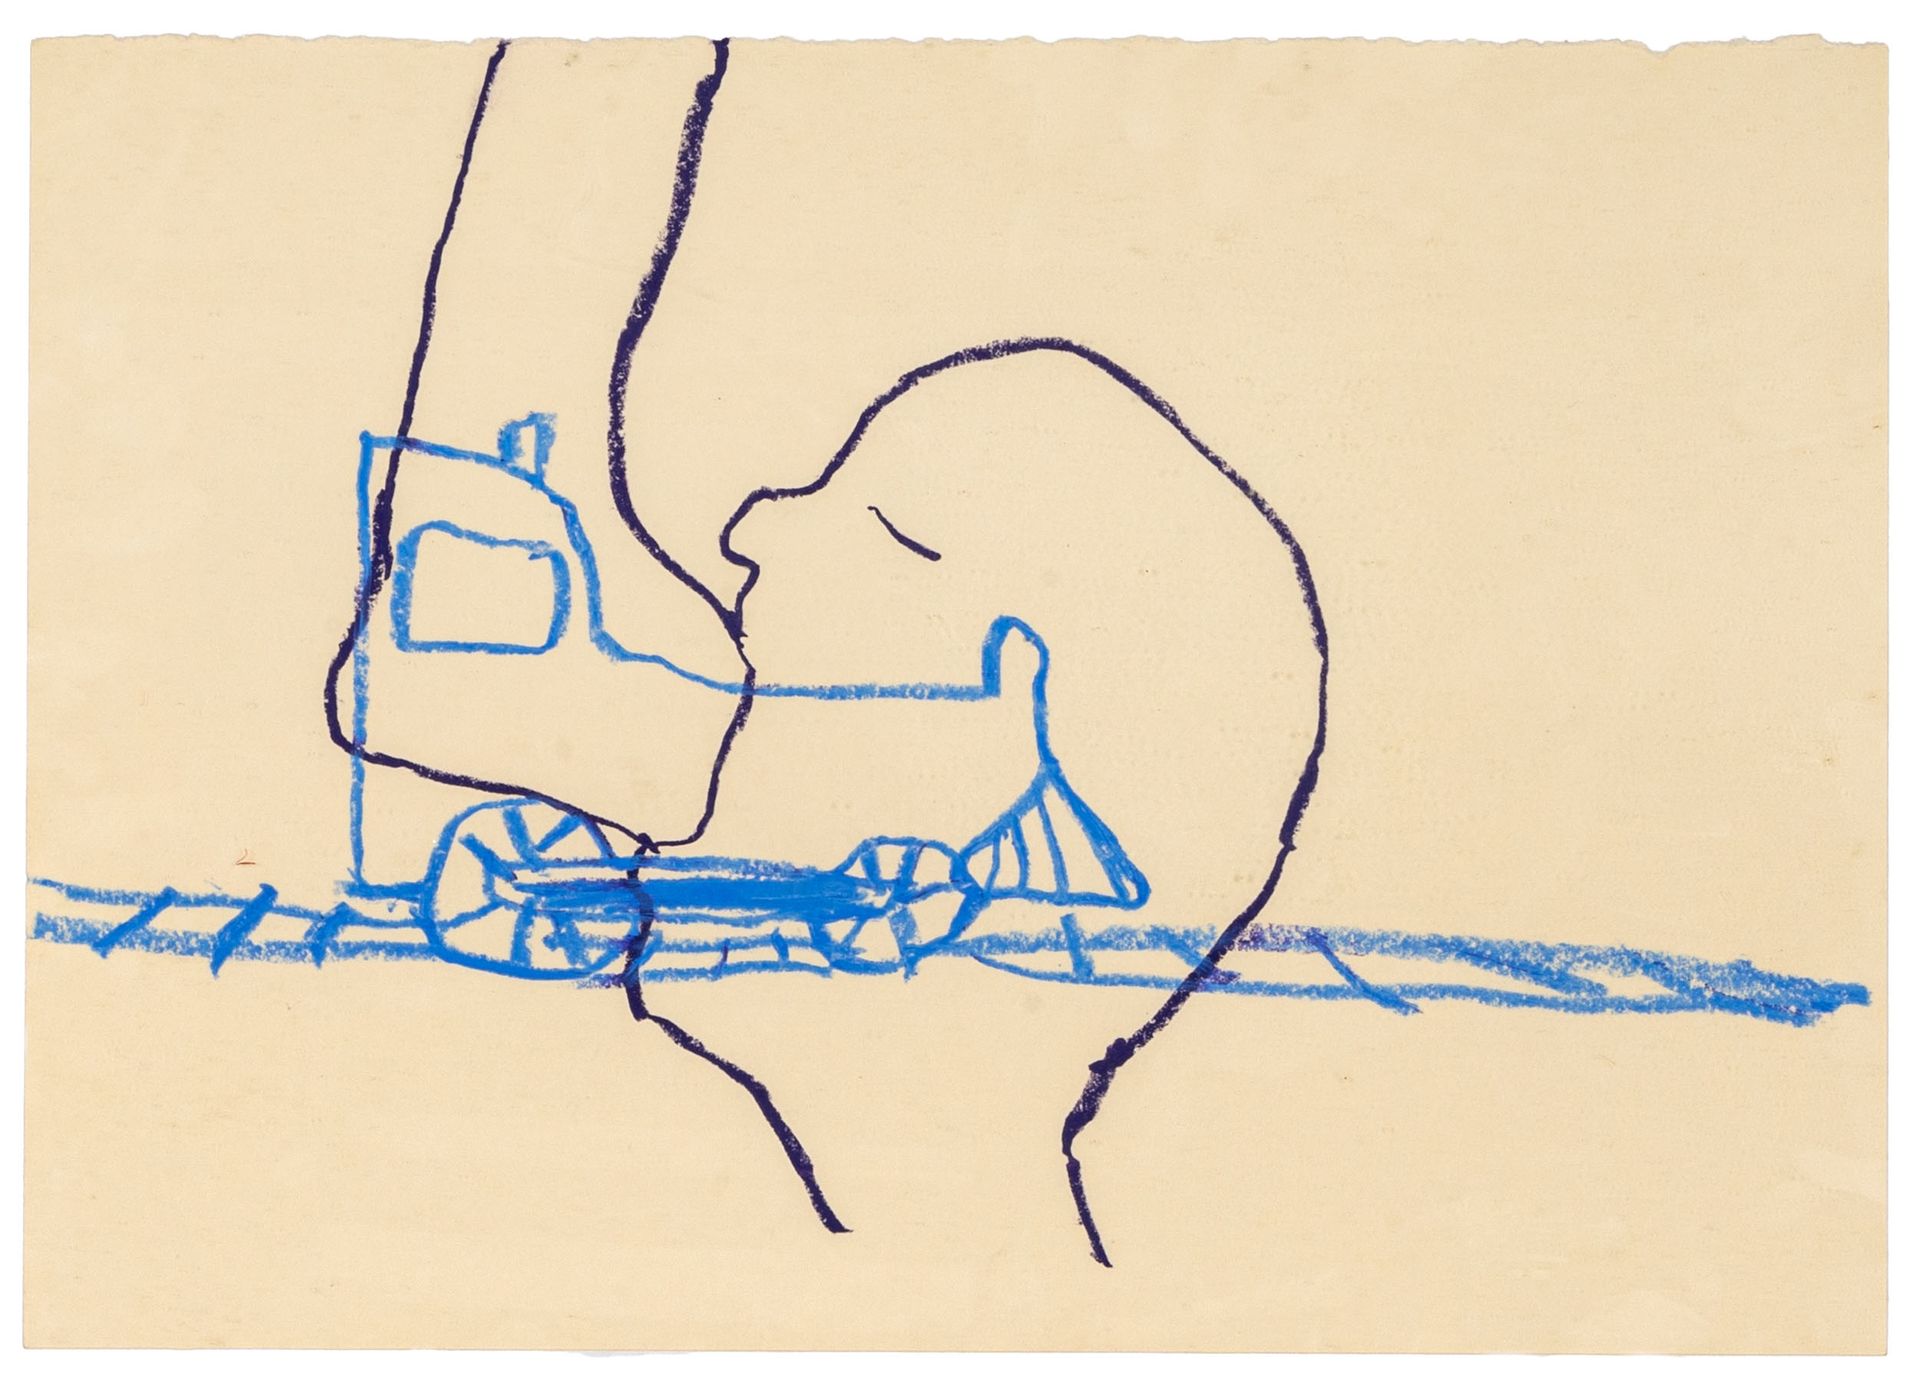 RYAN MENDOZA 雷恩-门多萨
(1971)
无题
纸上蜡笔画
35 x 50 cm
背面有签名

来源。
私人收藏，米兰